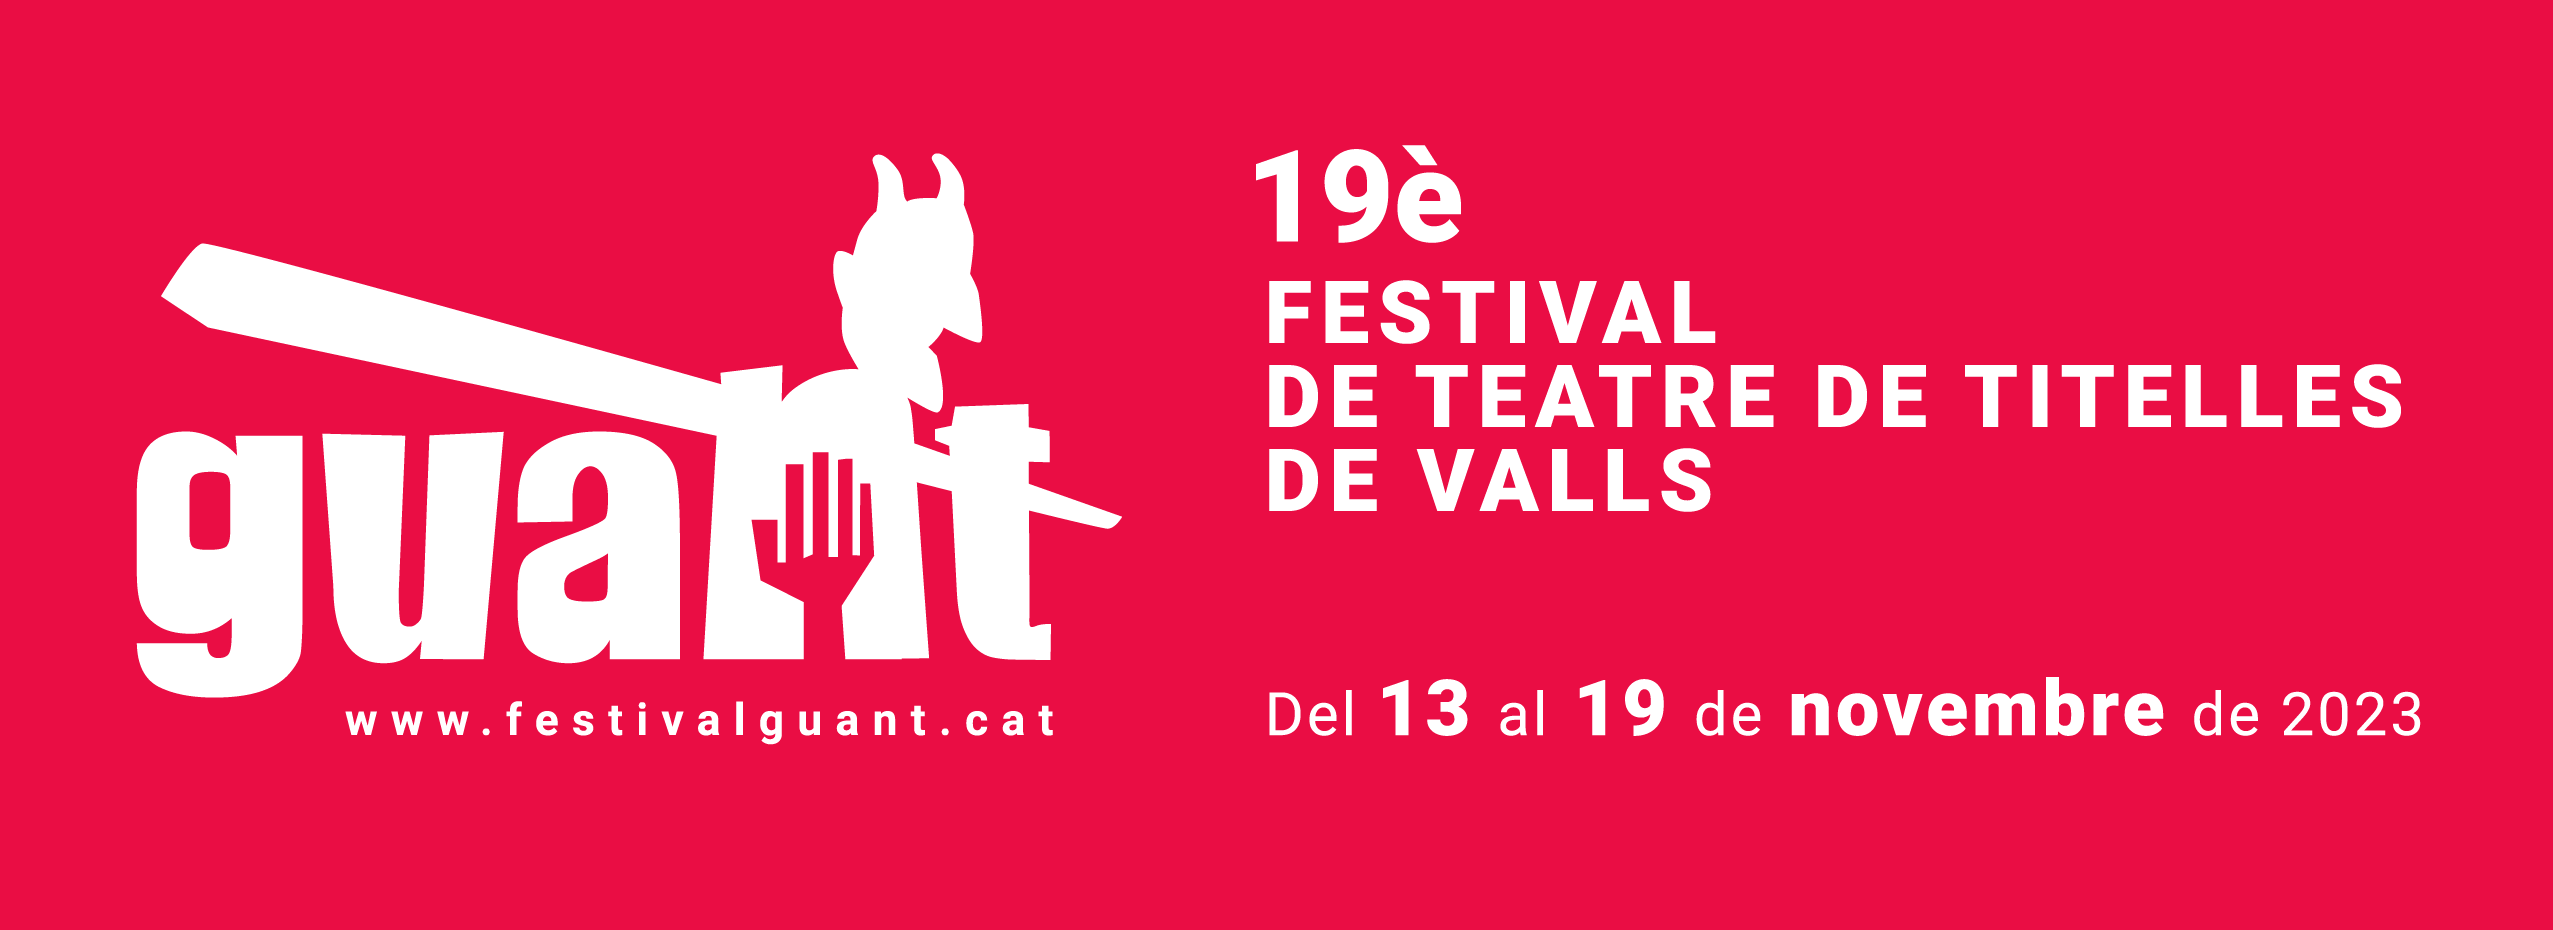 19è Festival internacional de teatre de titelles de Valls | Draps